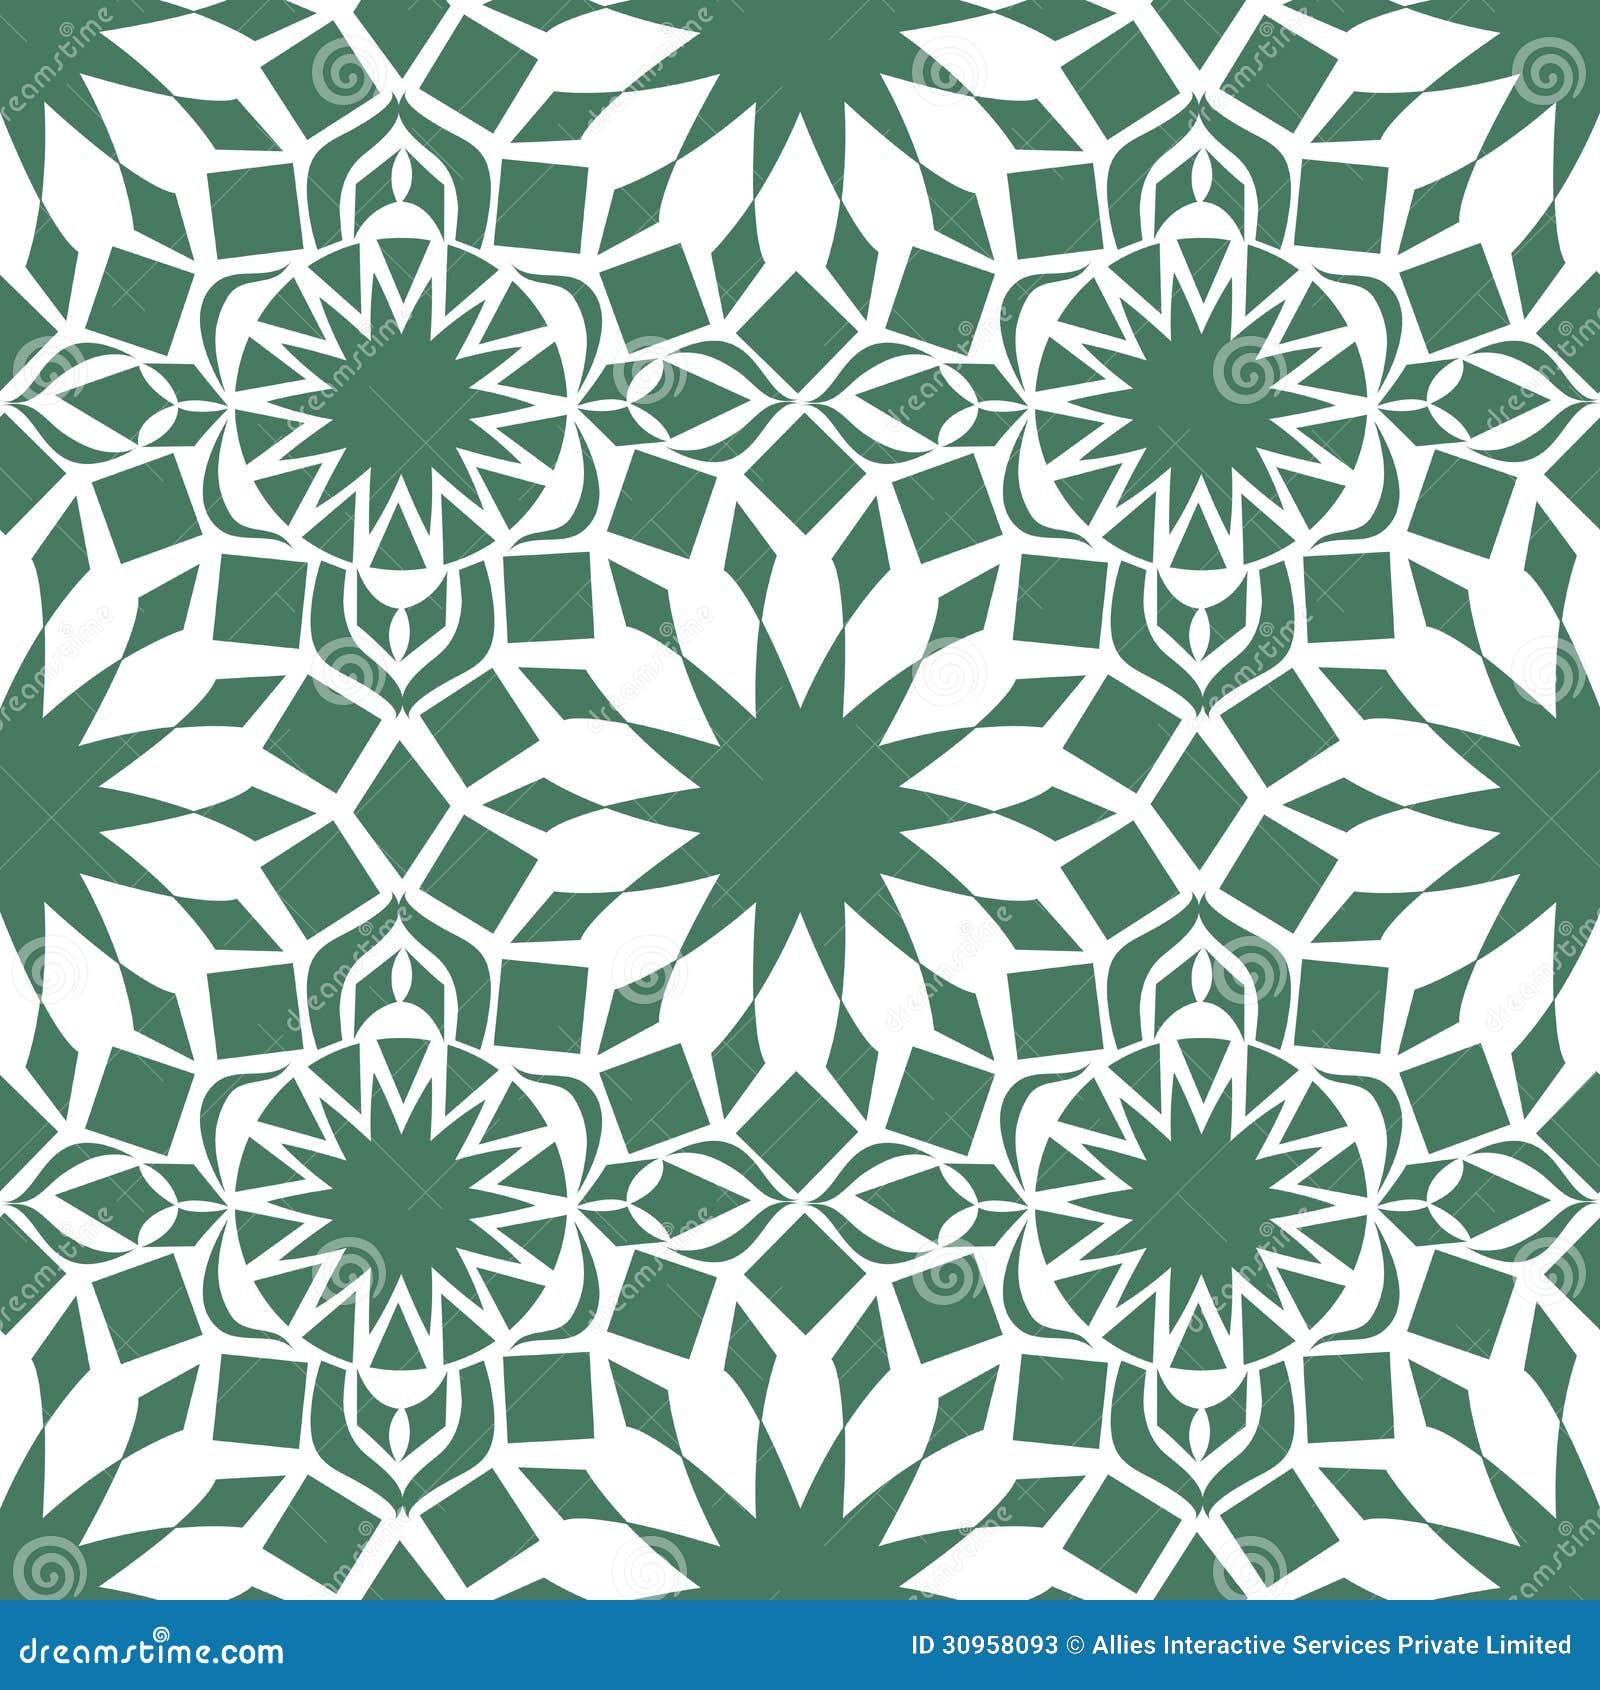 Arabic Or Islamic Ornaments Pattern Stock Illustration 